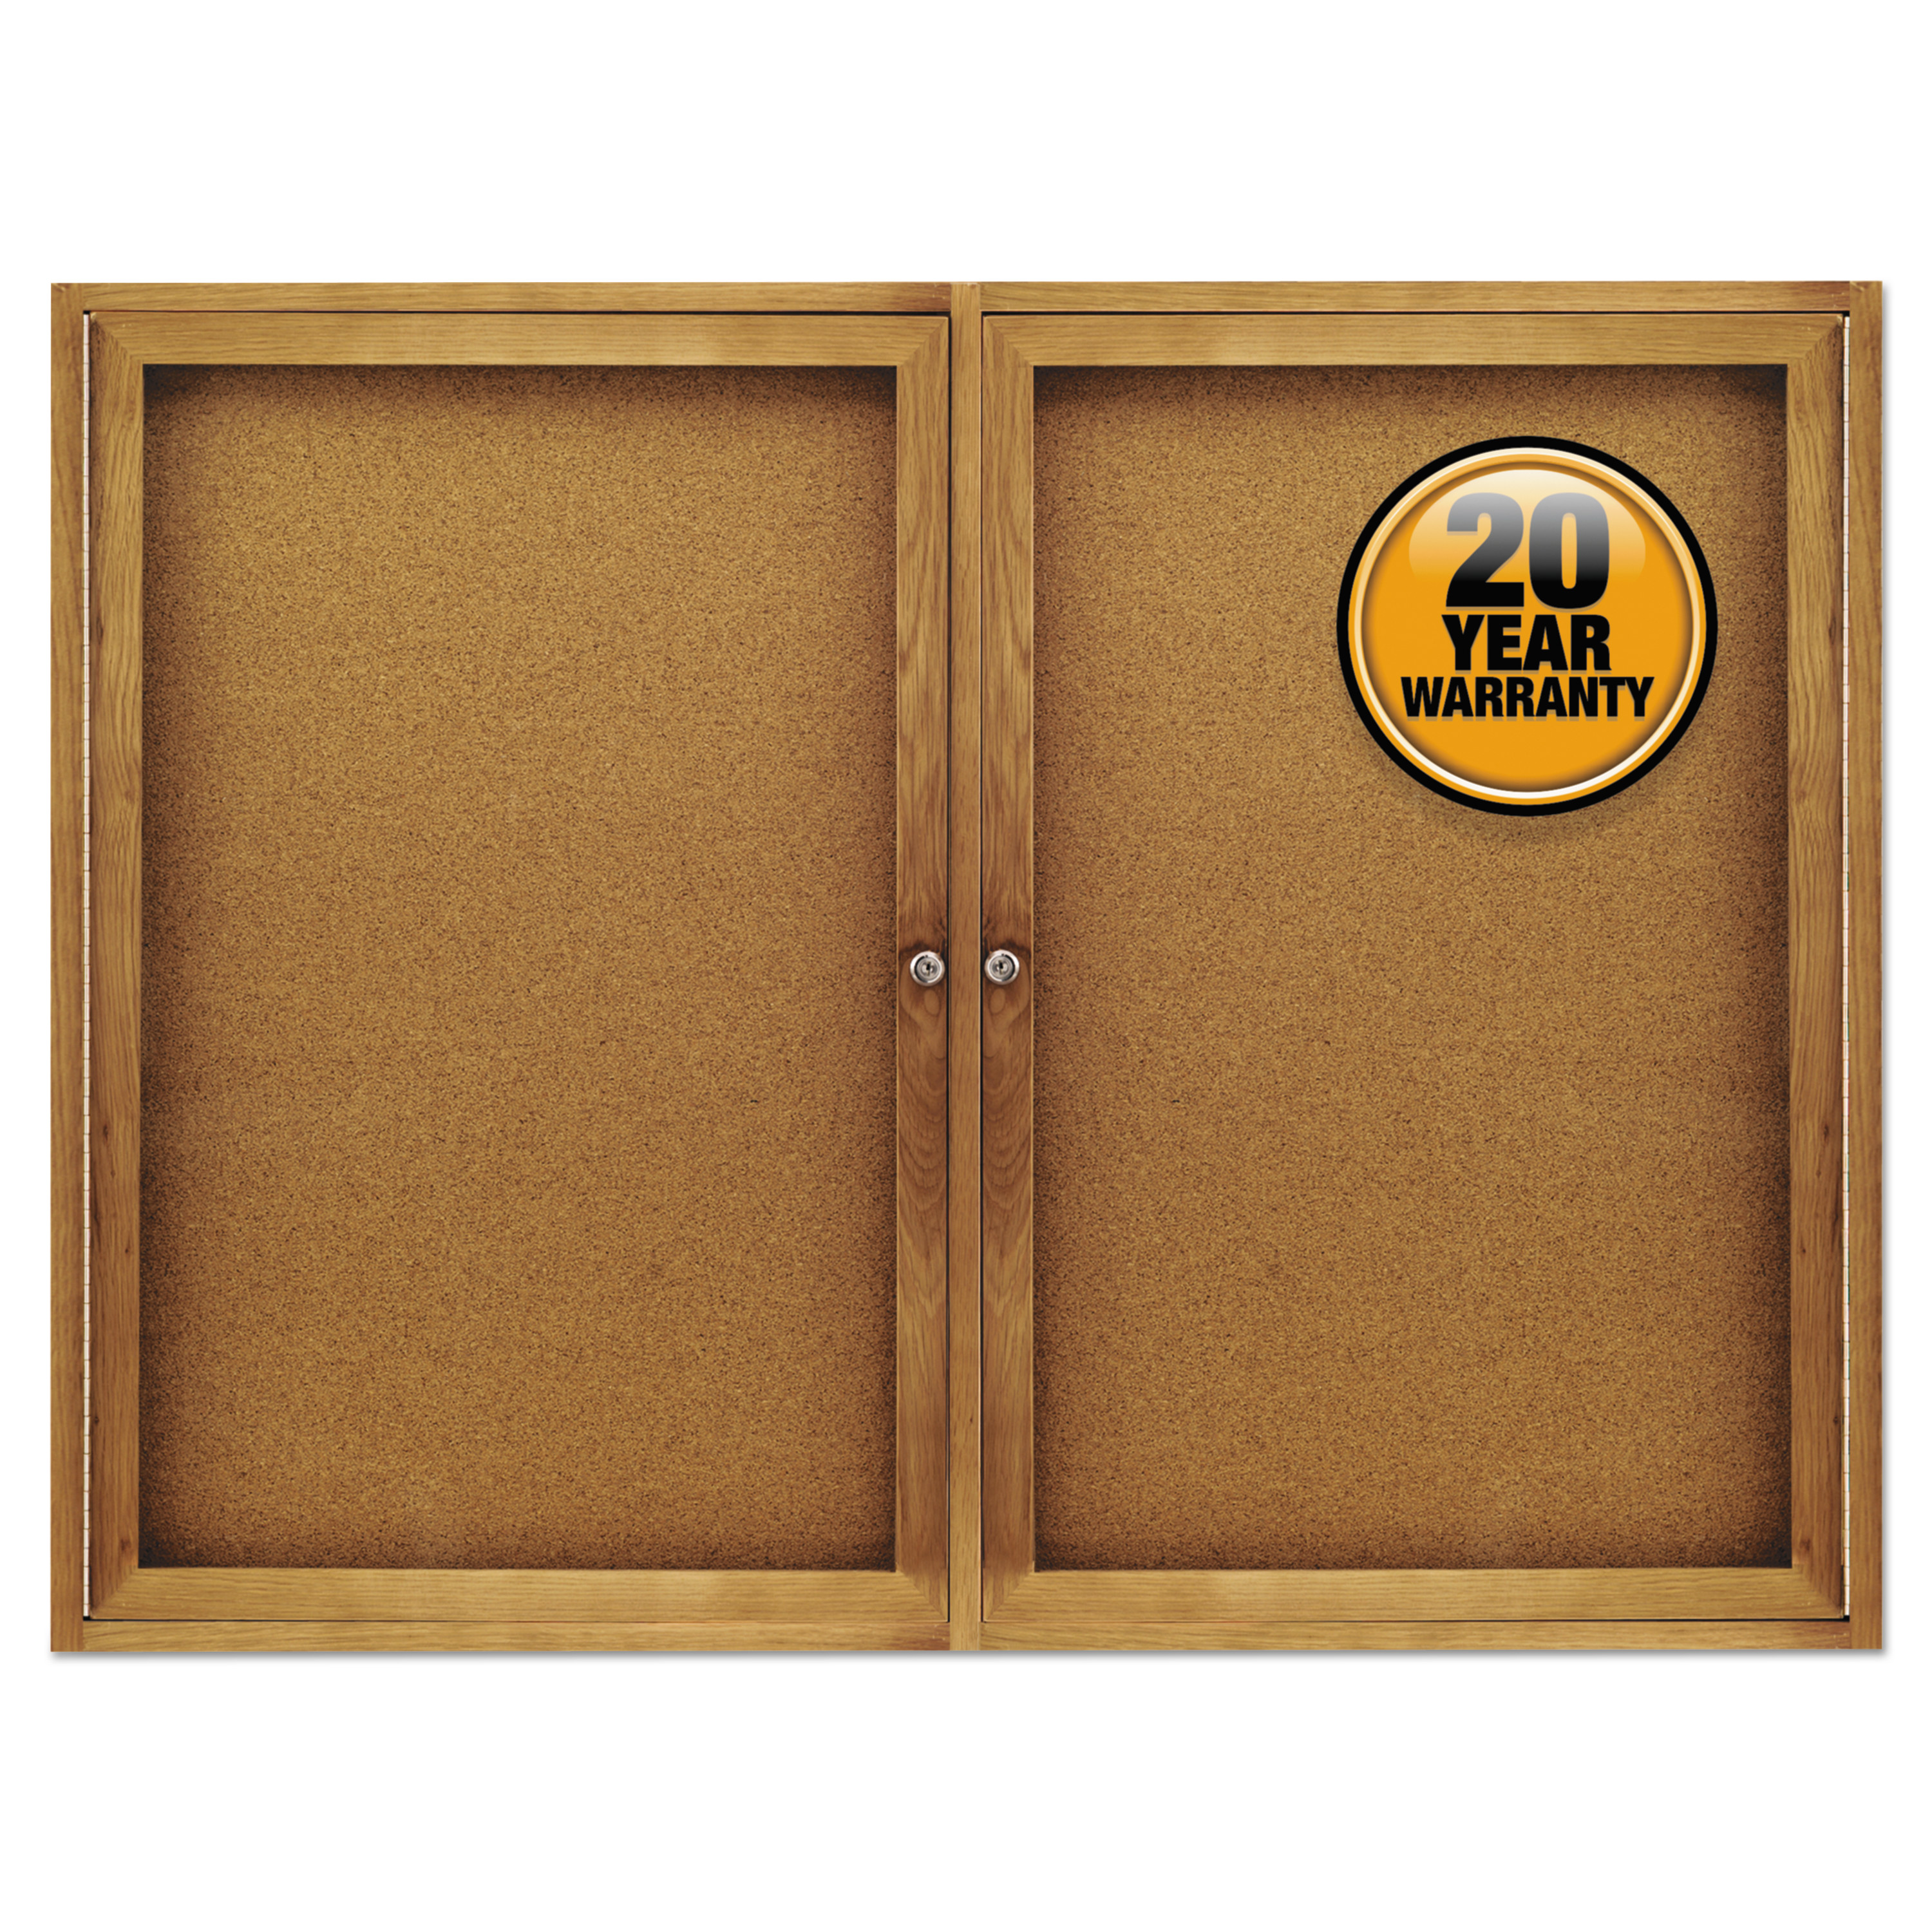  Quartet 364 Enclosed Bulletin Board, Natural Cork/Fiberboard, 48 x 36, Oak Frame (QRT364) 